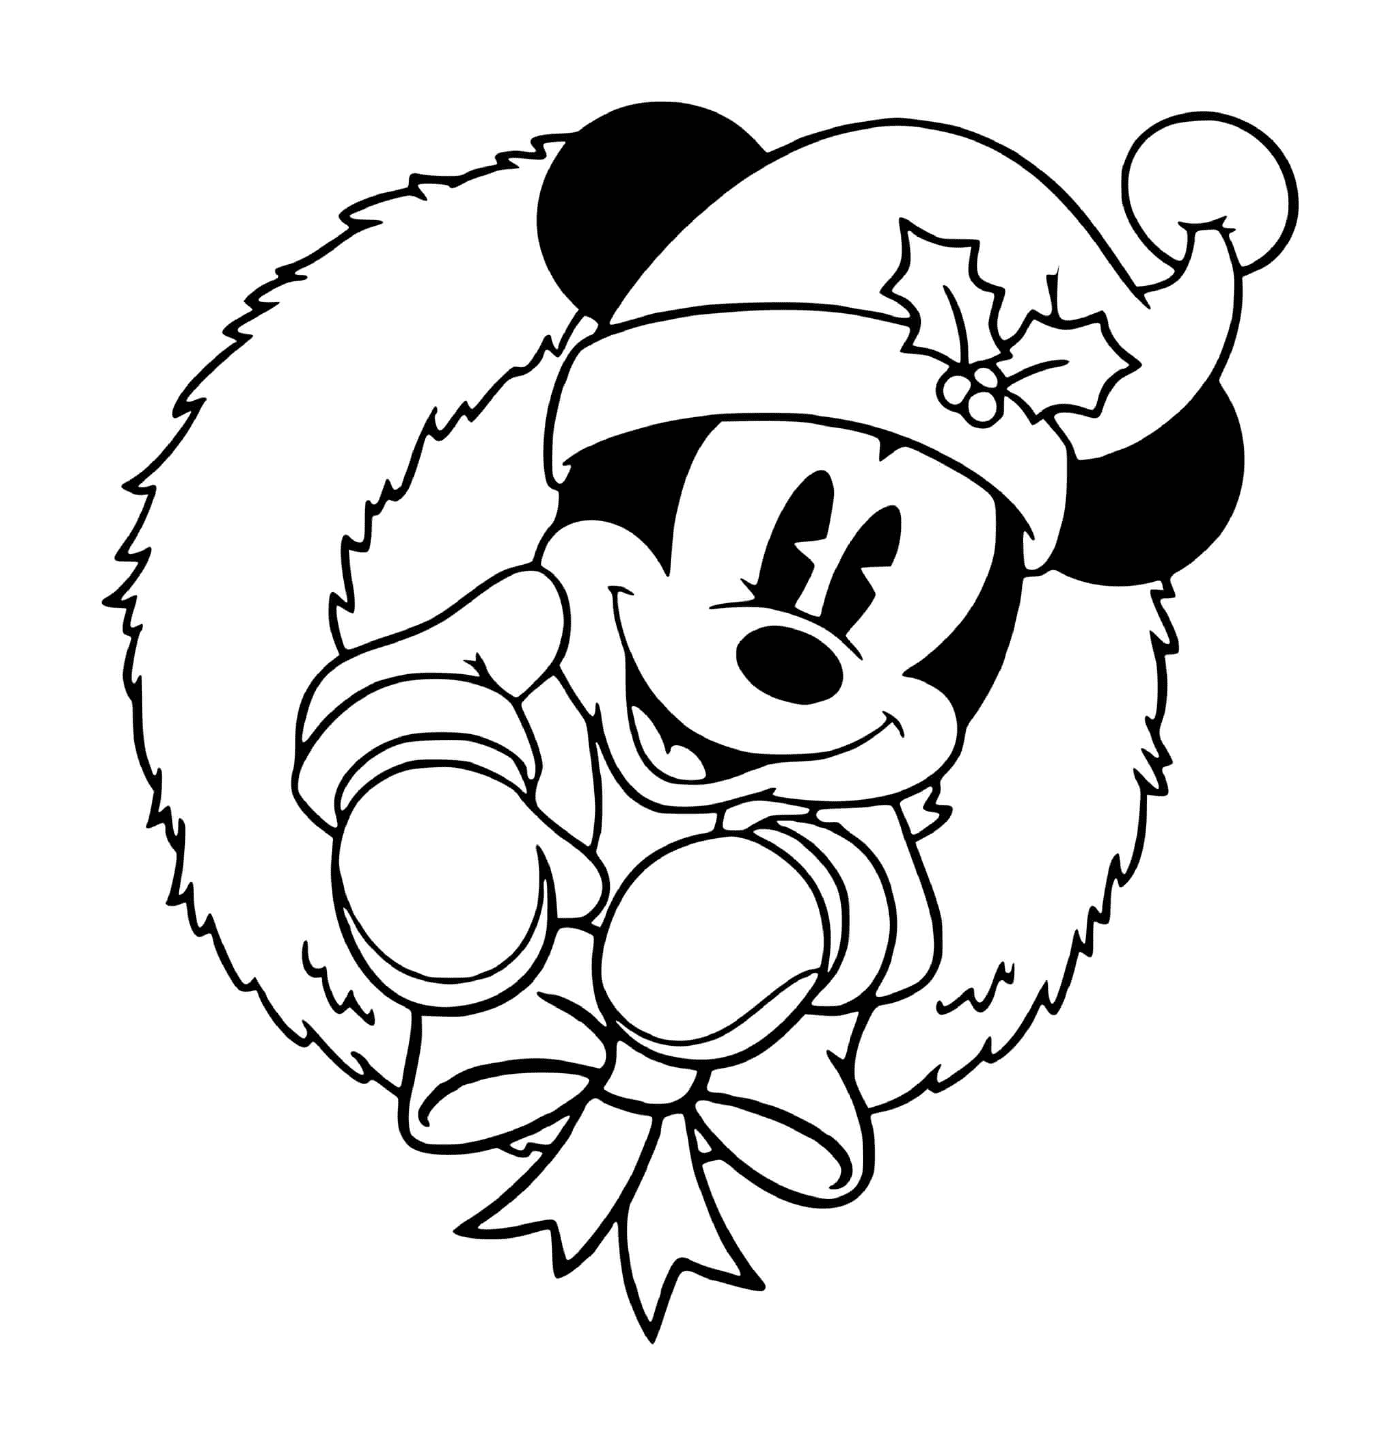  Mickey-Klassiker in einer Krone 